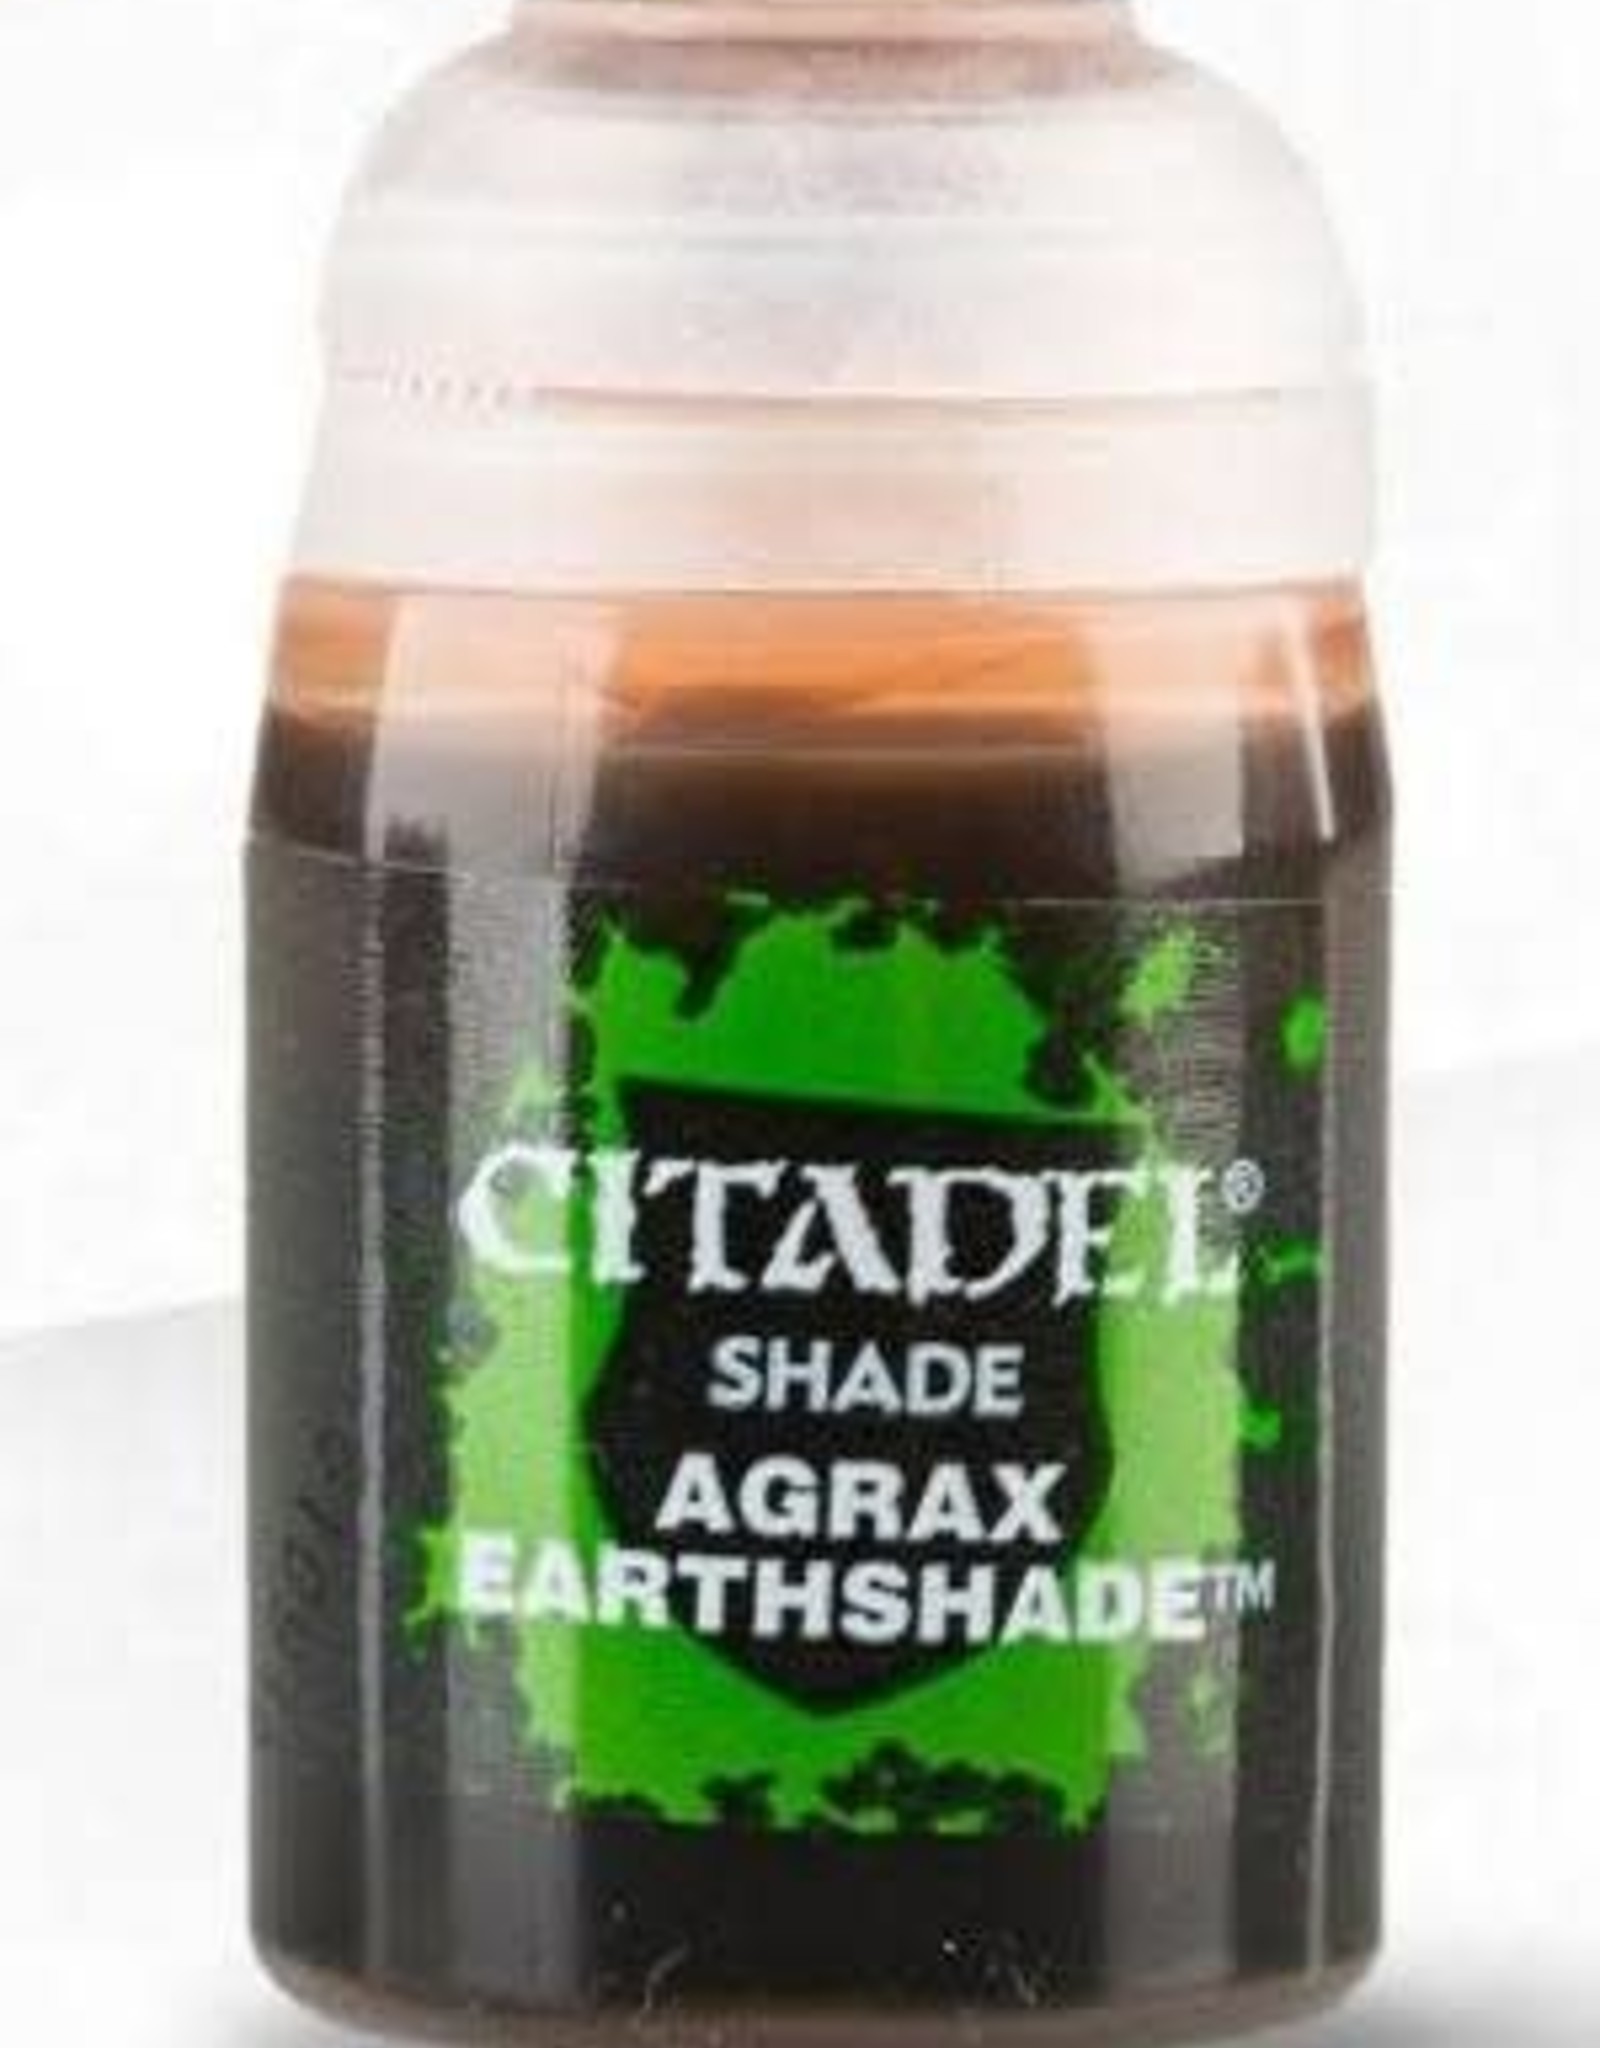 Games Workshop Citadel Paint: Shade - Agrax Earthshade